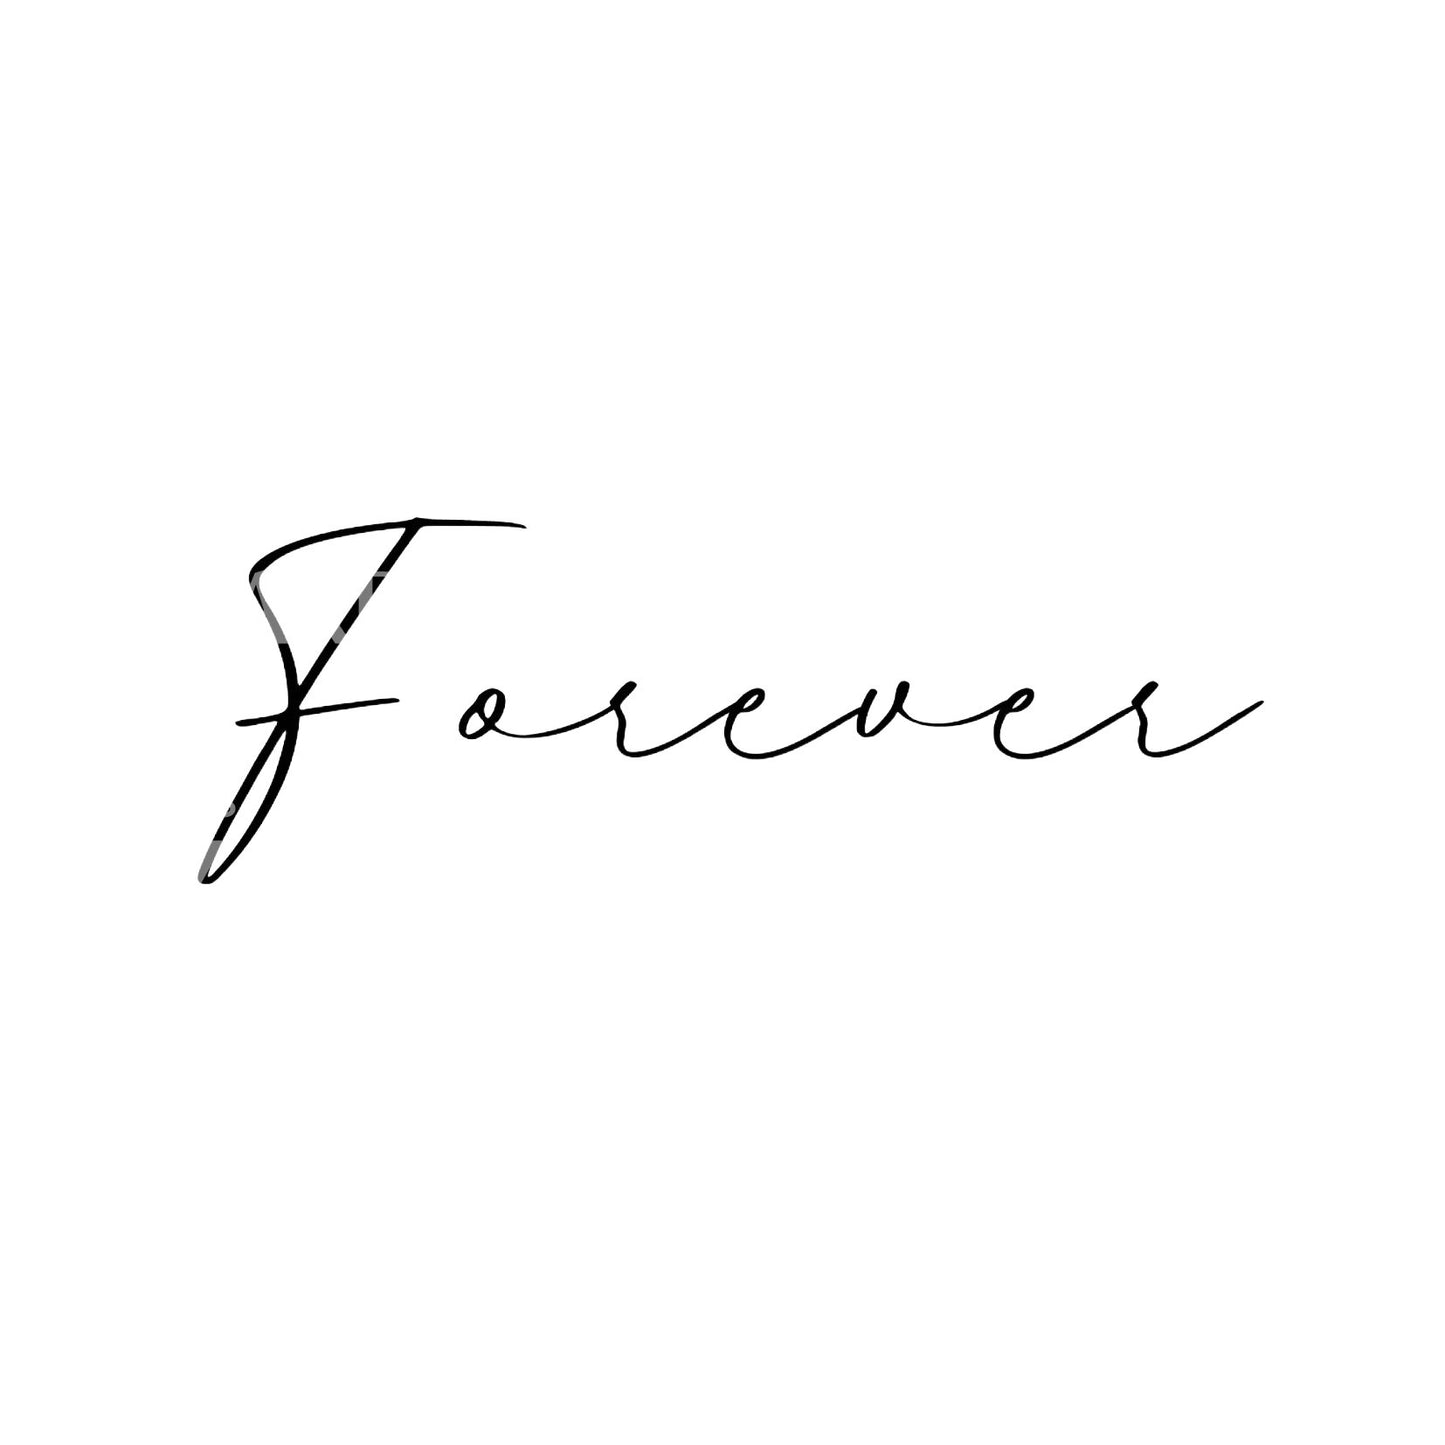 Forever Lettering Fineline Tattoo Design